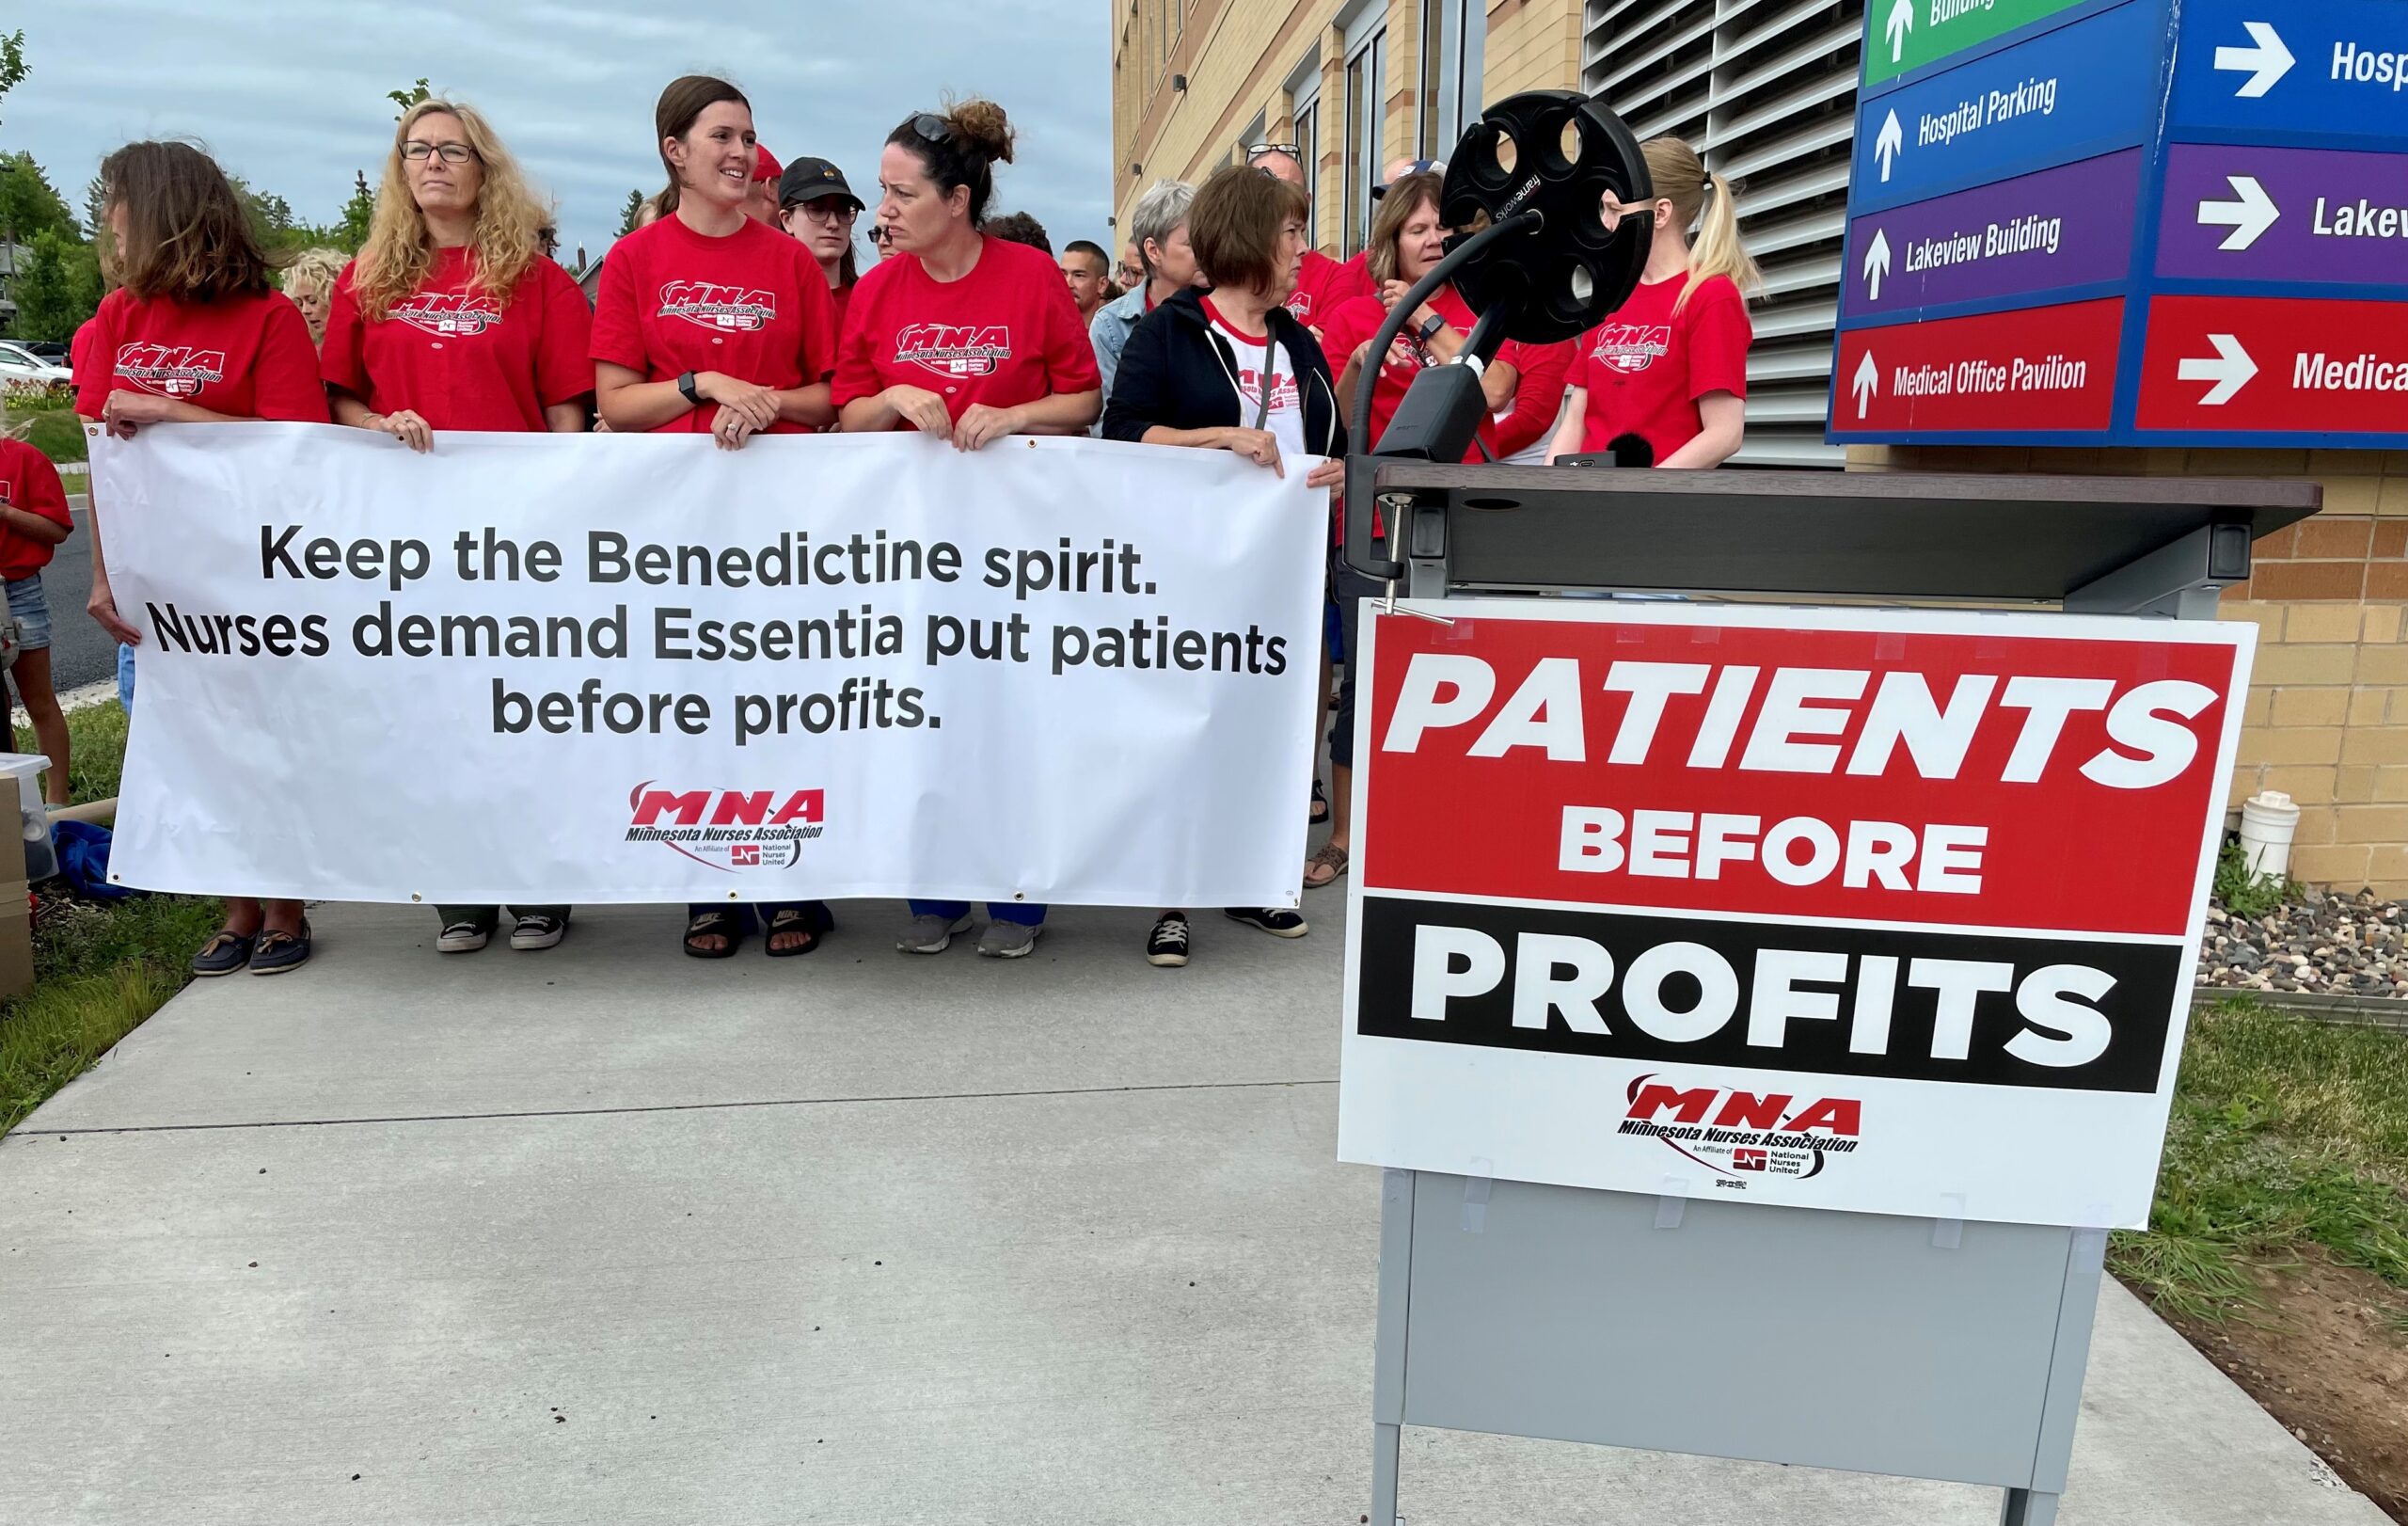 Union nurses hold a banner